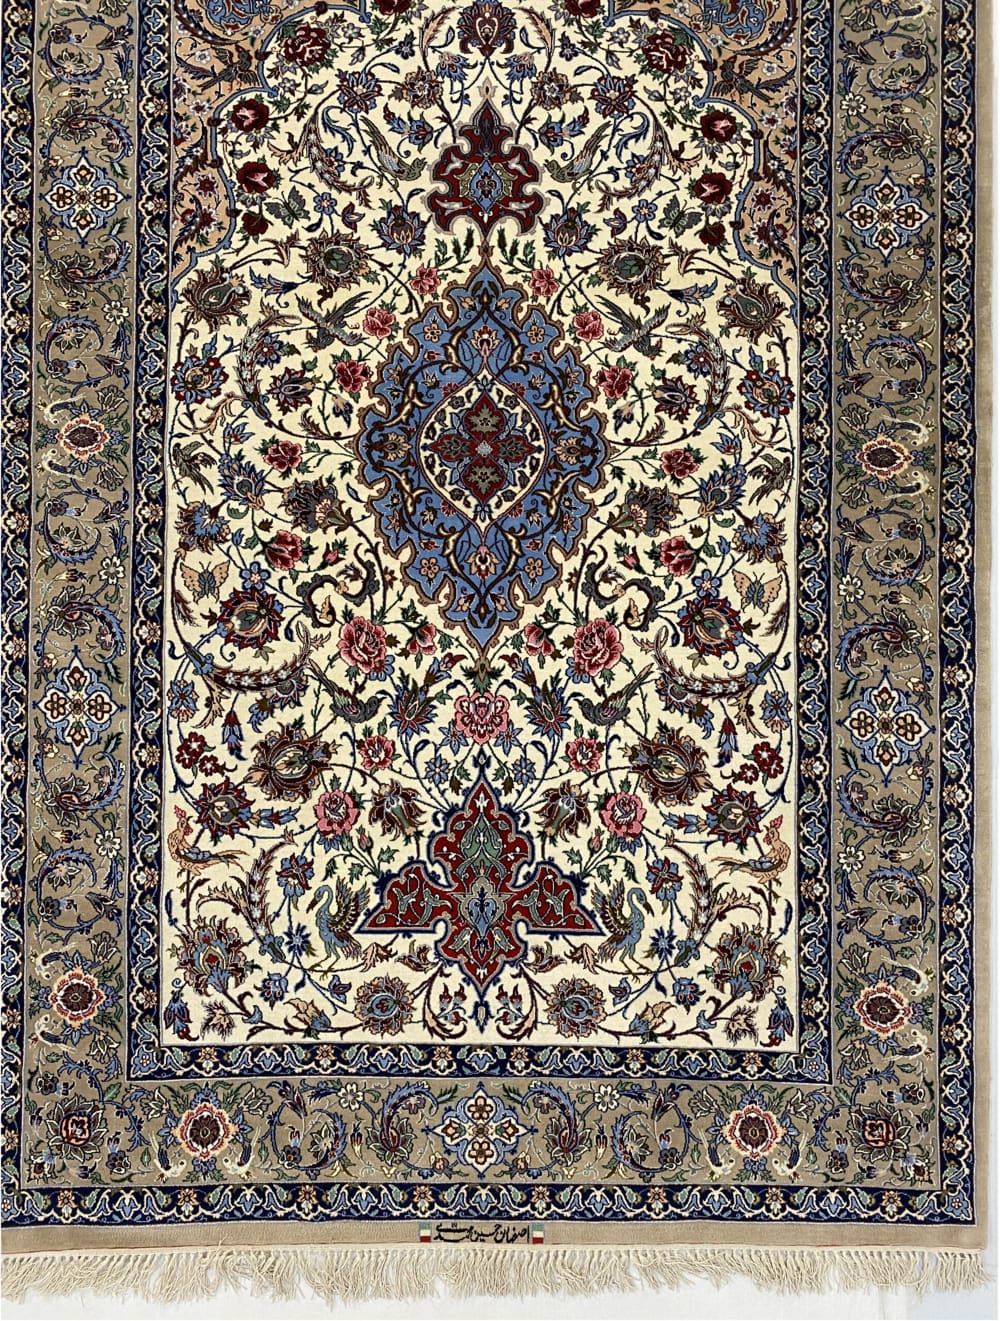 Rug# 10123, Isfehan, Kork-wool & silk pile on a full silk foundation, 900k KPSQM, Signed, circa 1980, Persia, size 192x130 cm (3)